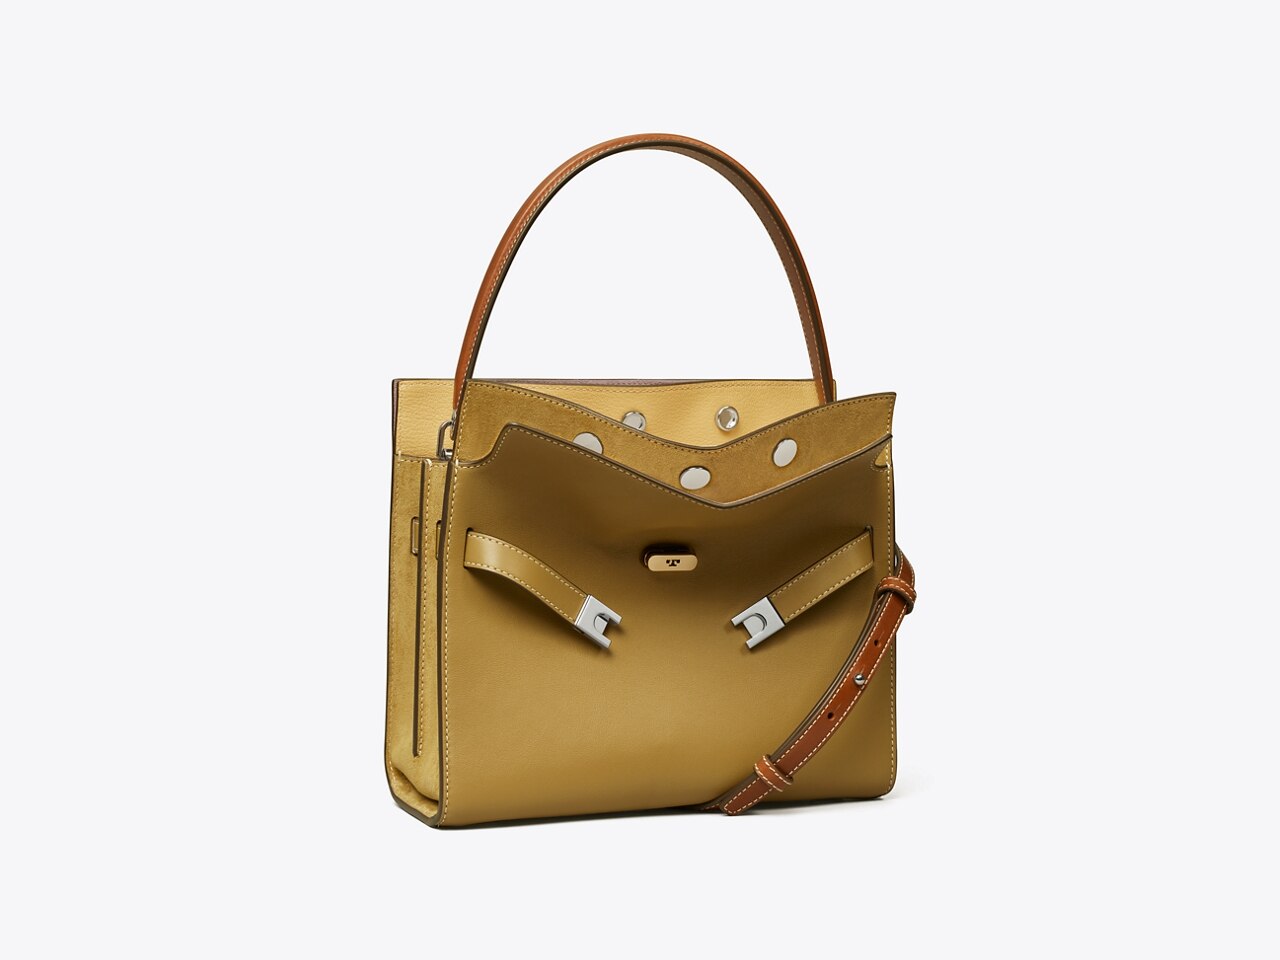 Tory Burch Mini Lee Radziwill Leather Bag, $498